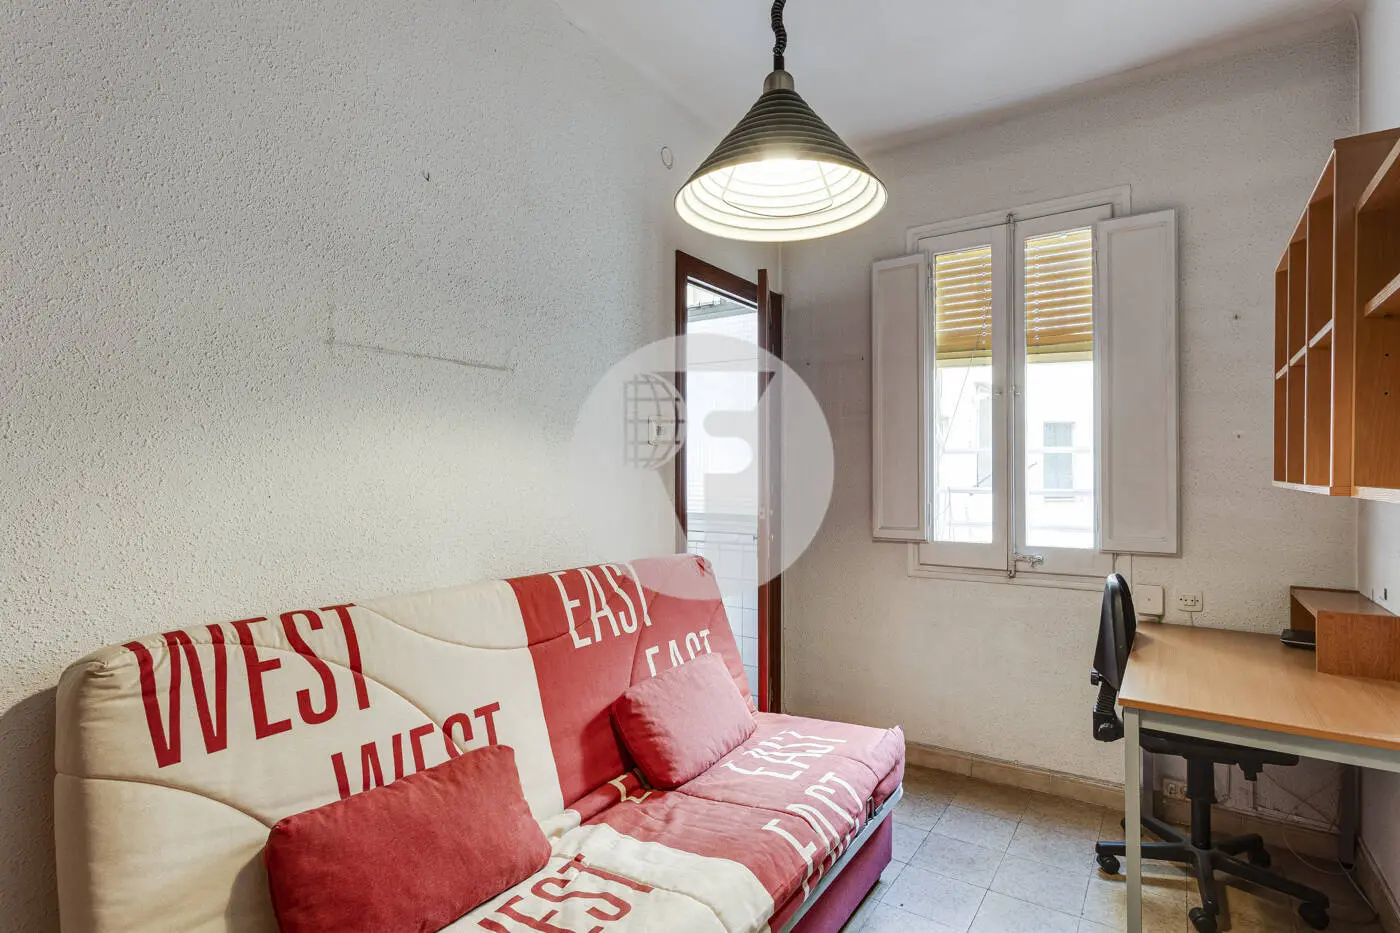 3-bedroom apartment located in the Nova Esquerra de l'Eixample neighborhood of Barcelona. 20